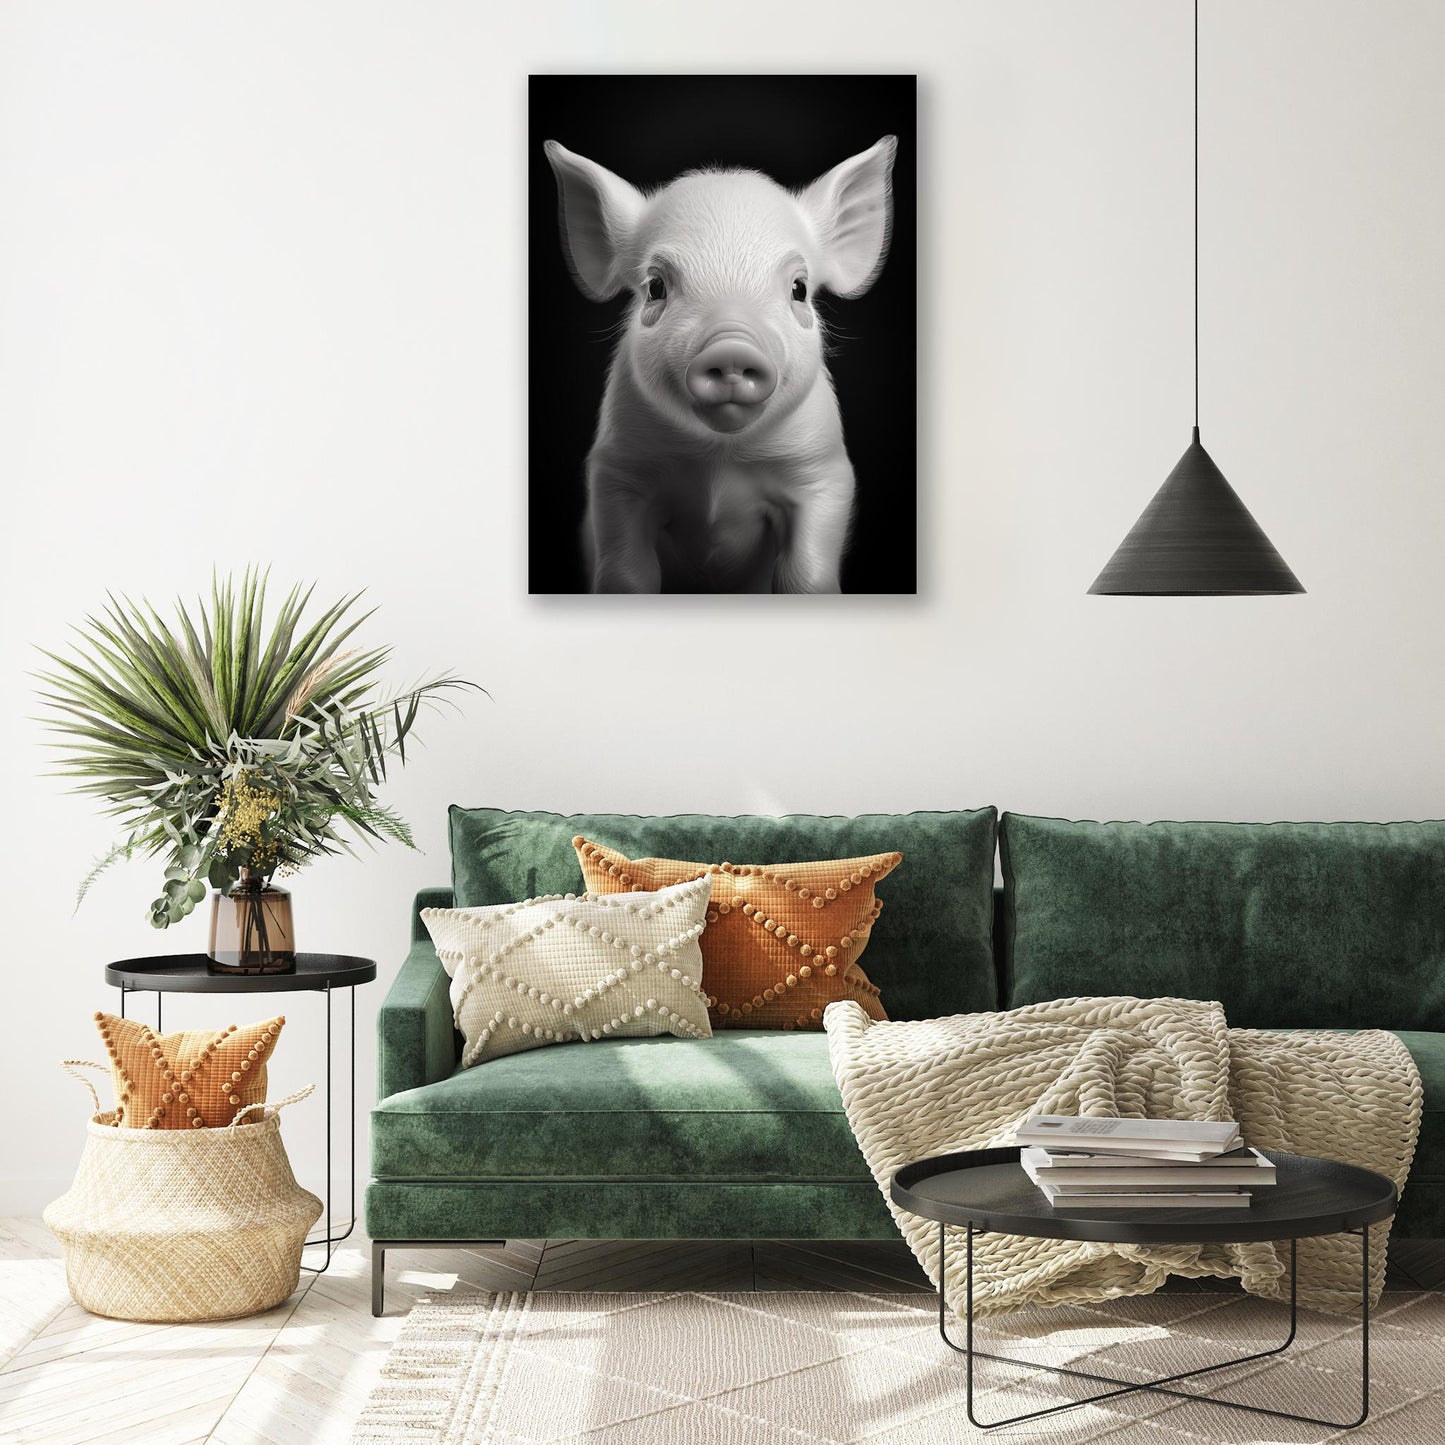 Piglet Portrait - Atka Inspirations